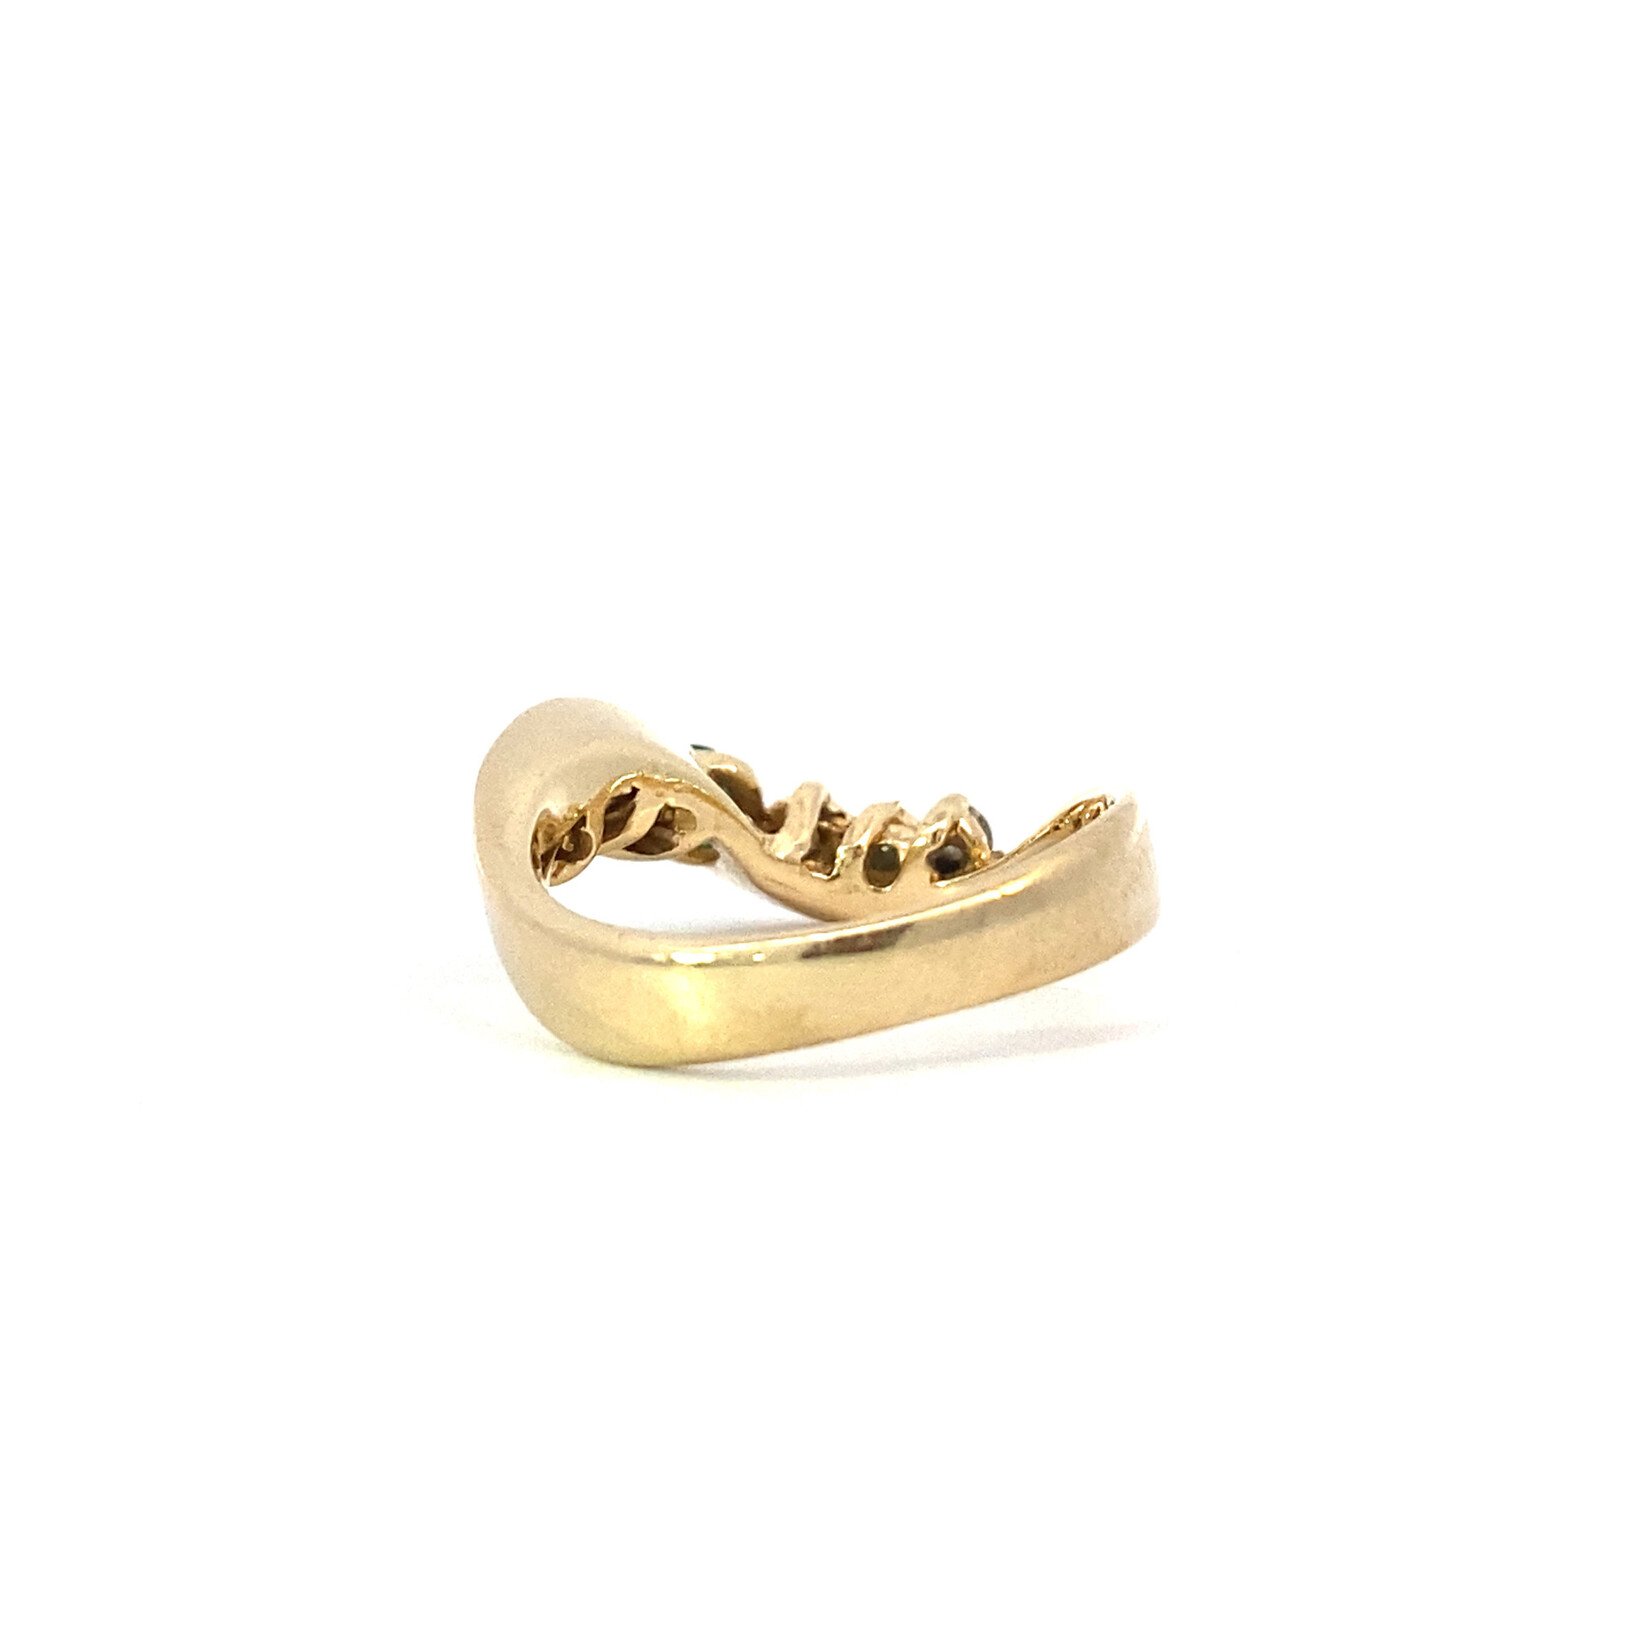 14K Yellow Gold Emerald Diamond ring  D. +/- .18cttw size 6.5